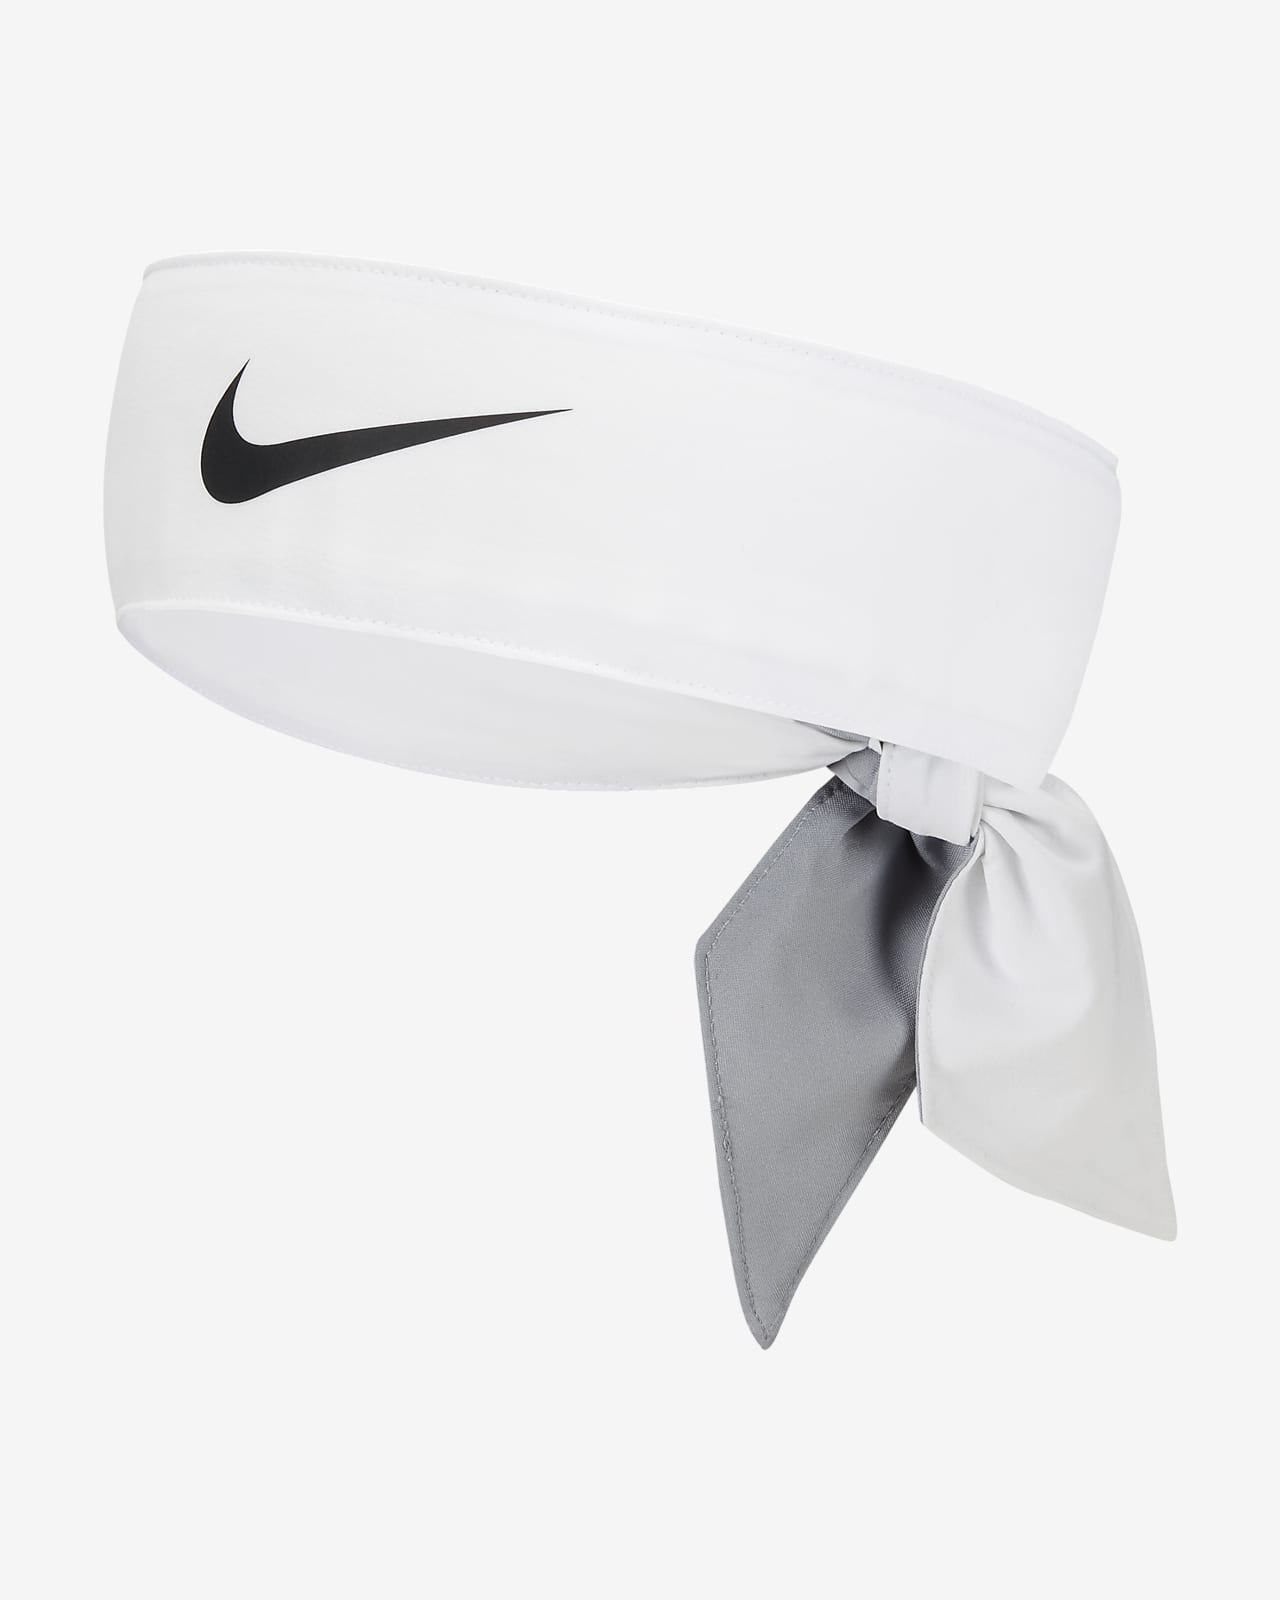 Bandeau tennis femme Nike premier - Nike - Marques - Textile